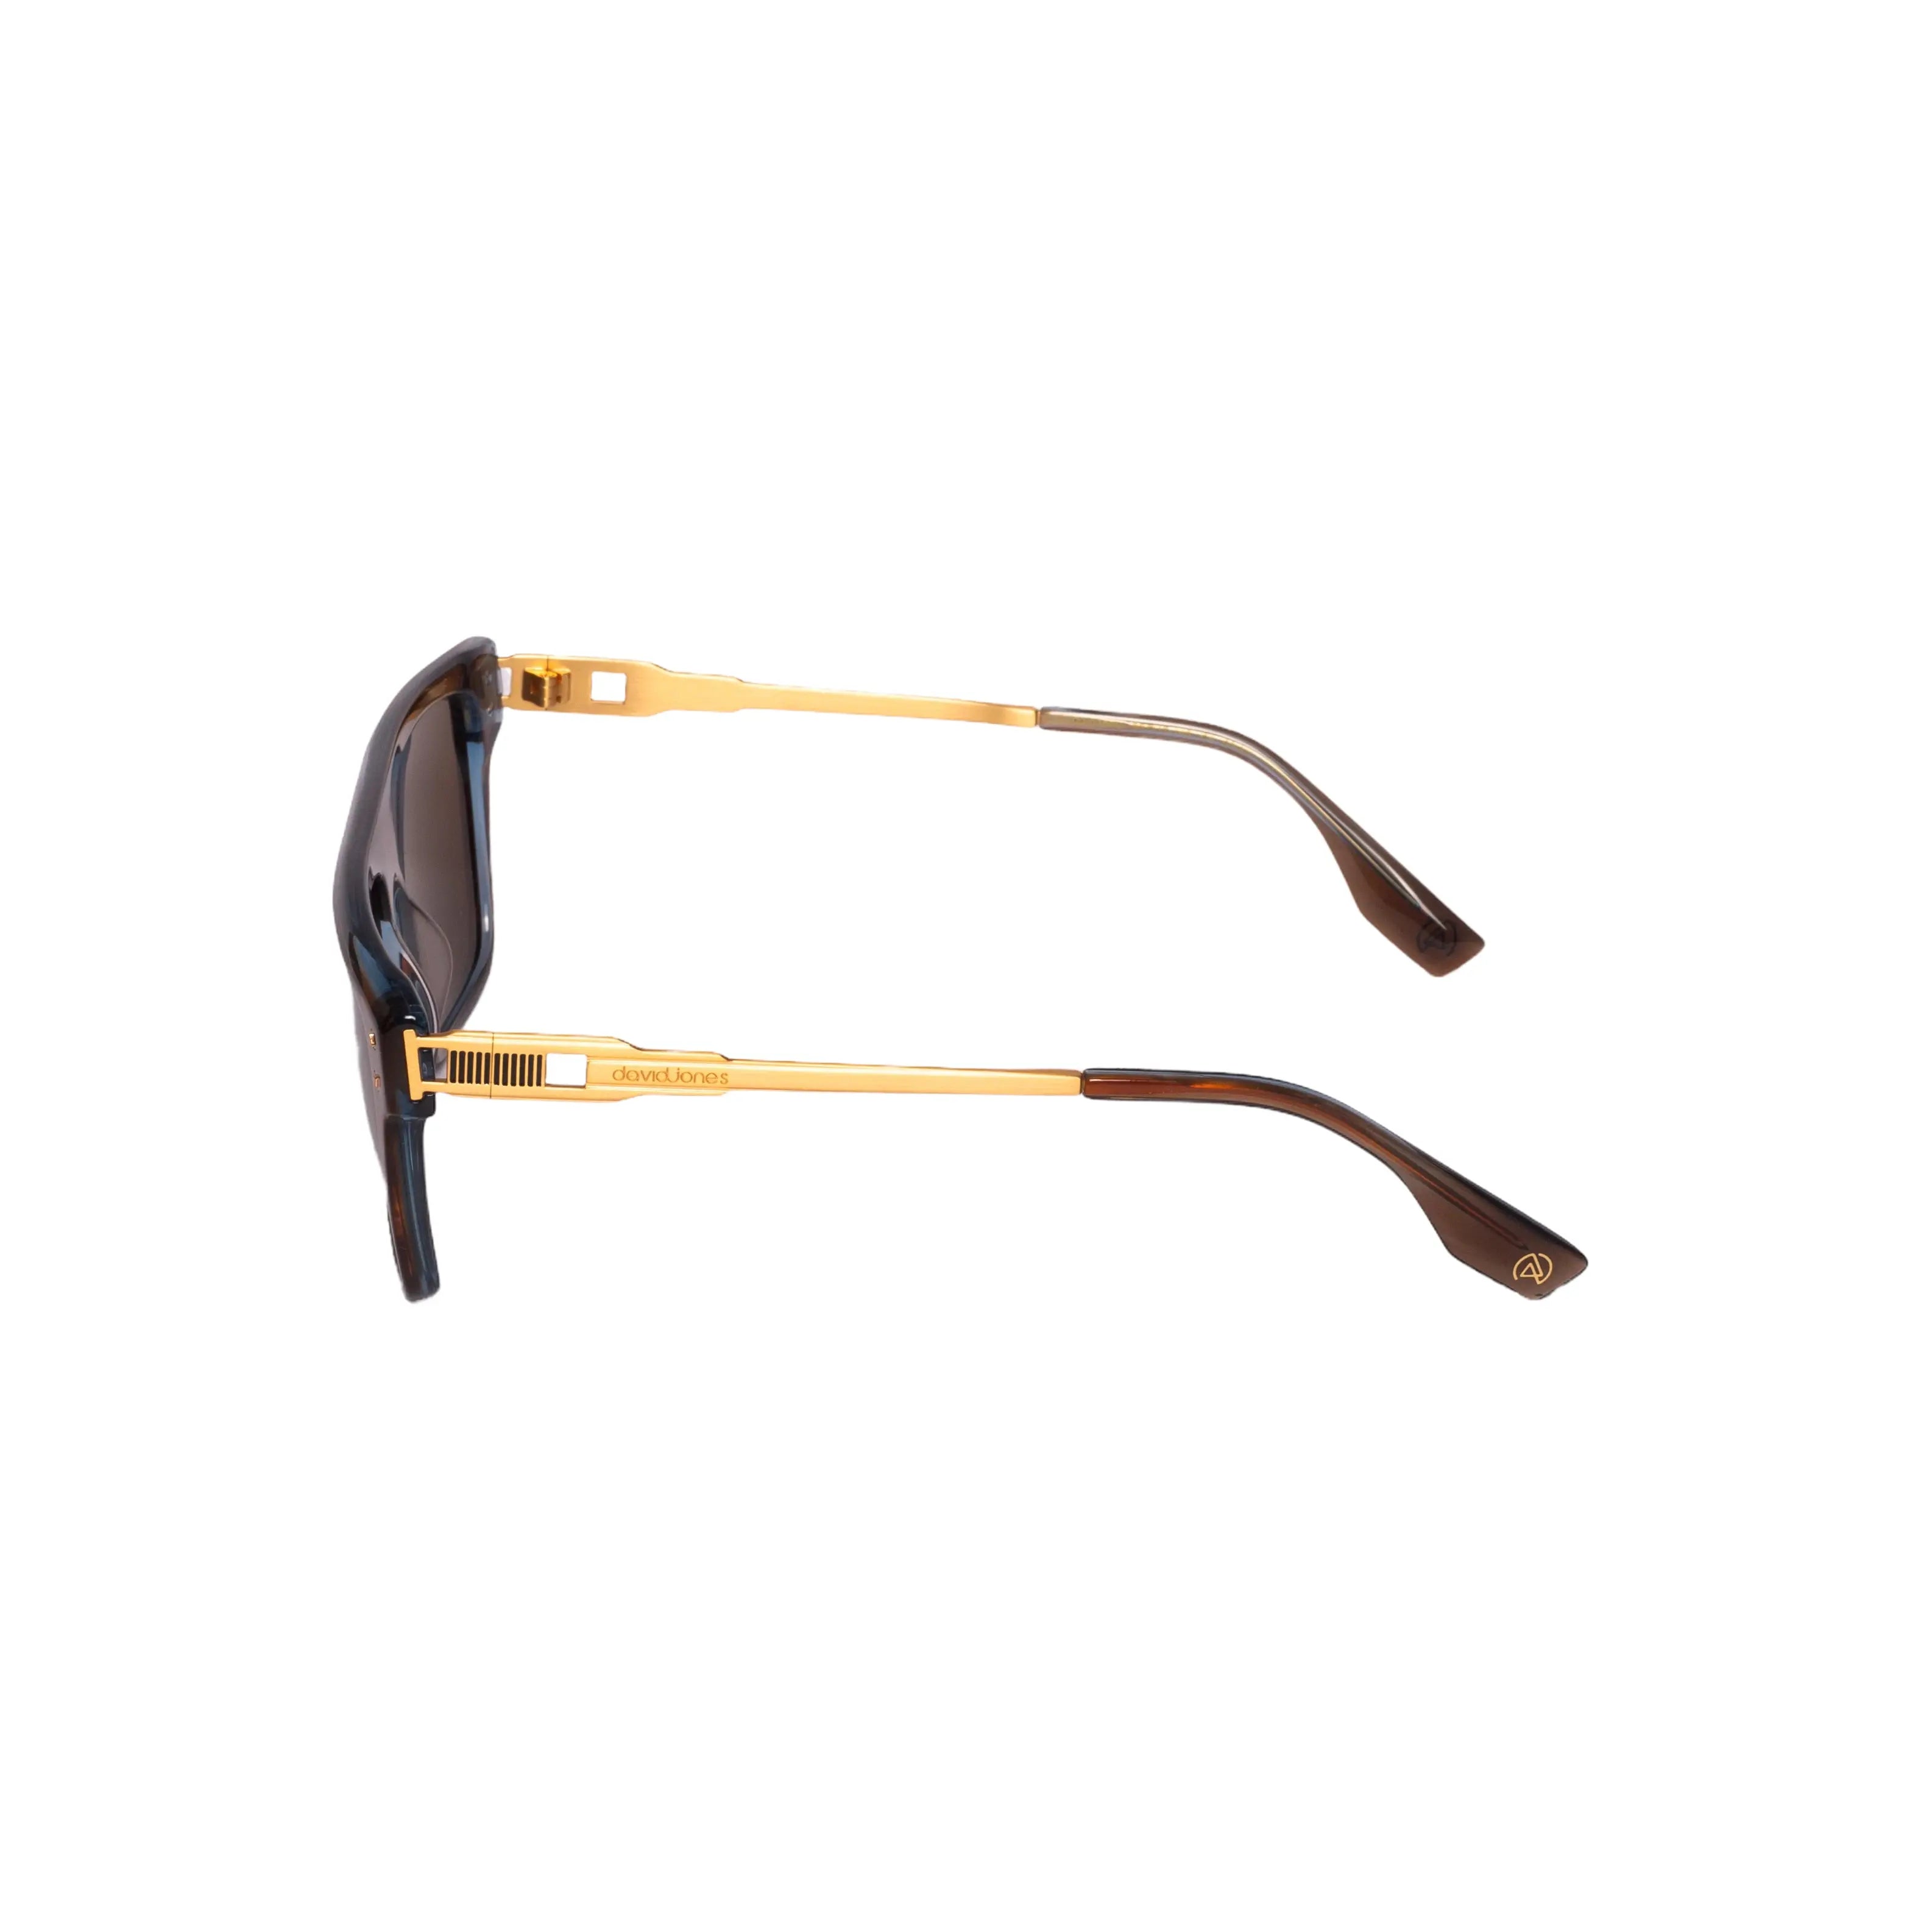 David Jones-DJ 0356-55-C3 Sunglasses - Premium Sunglasses from David Jones - Just Rs. 5490! Shop now at Laxmi Opticians